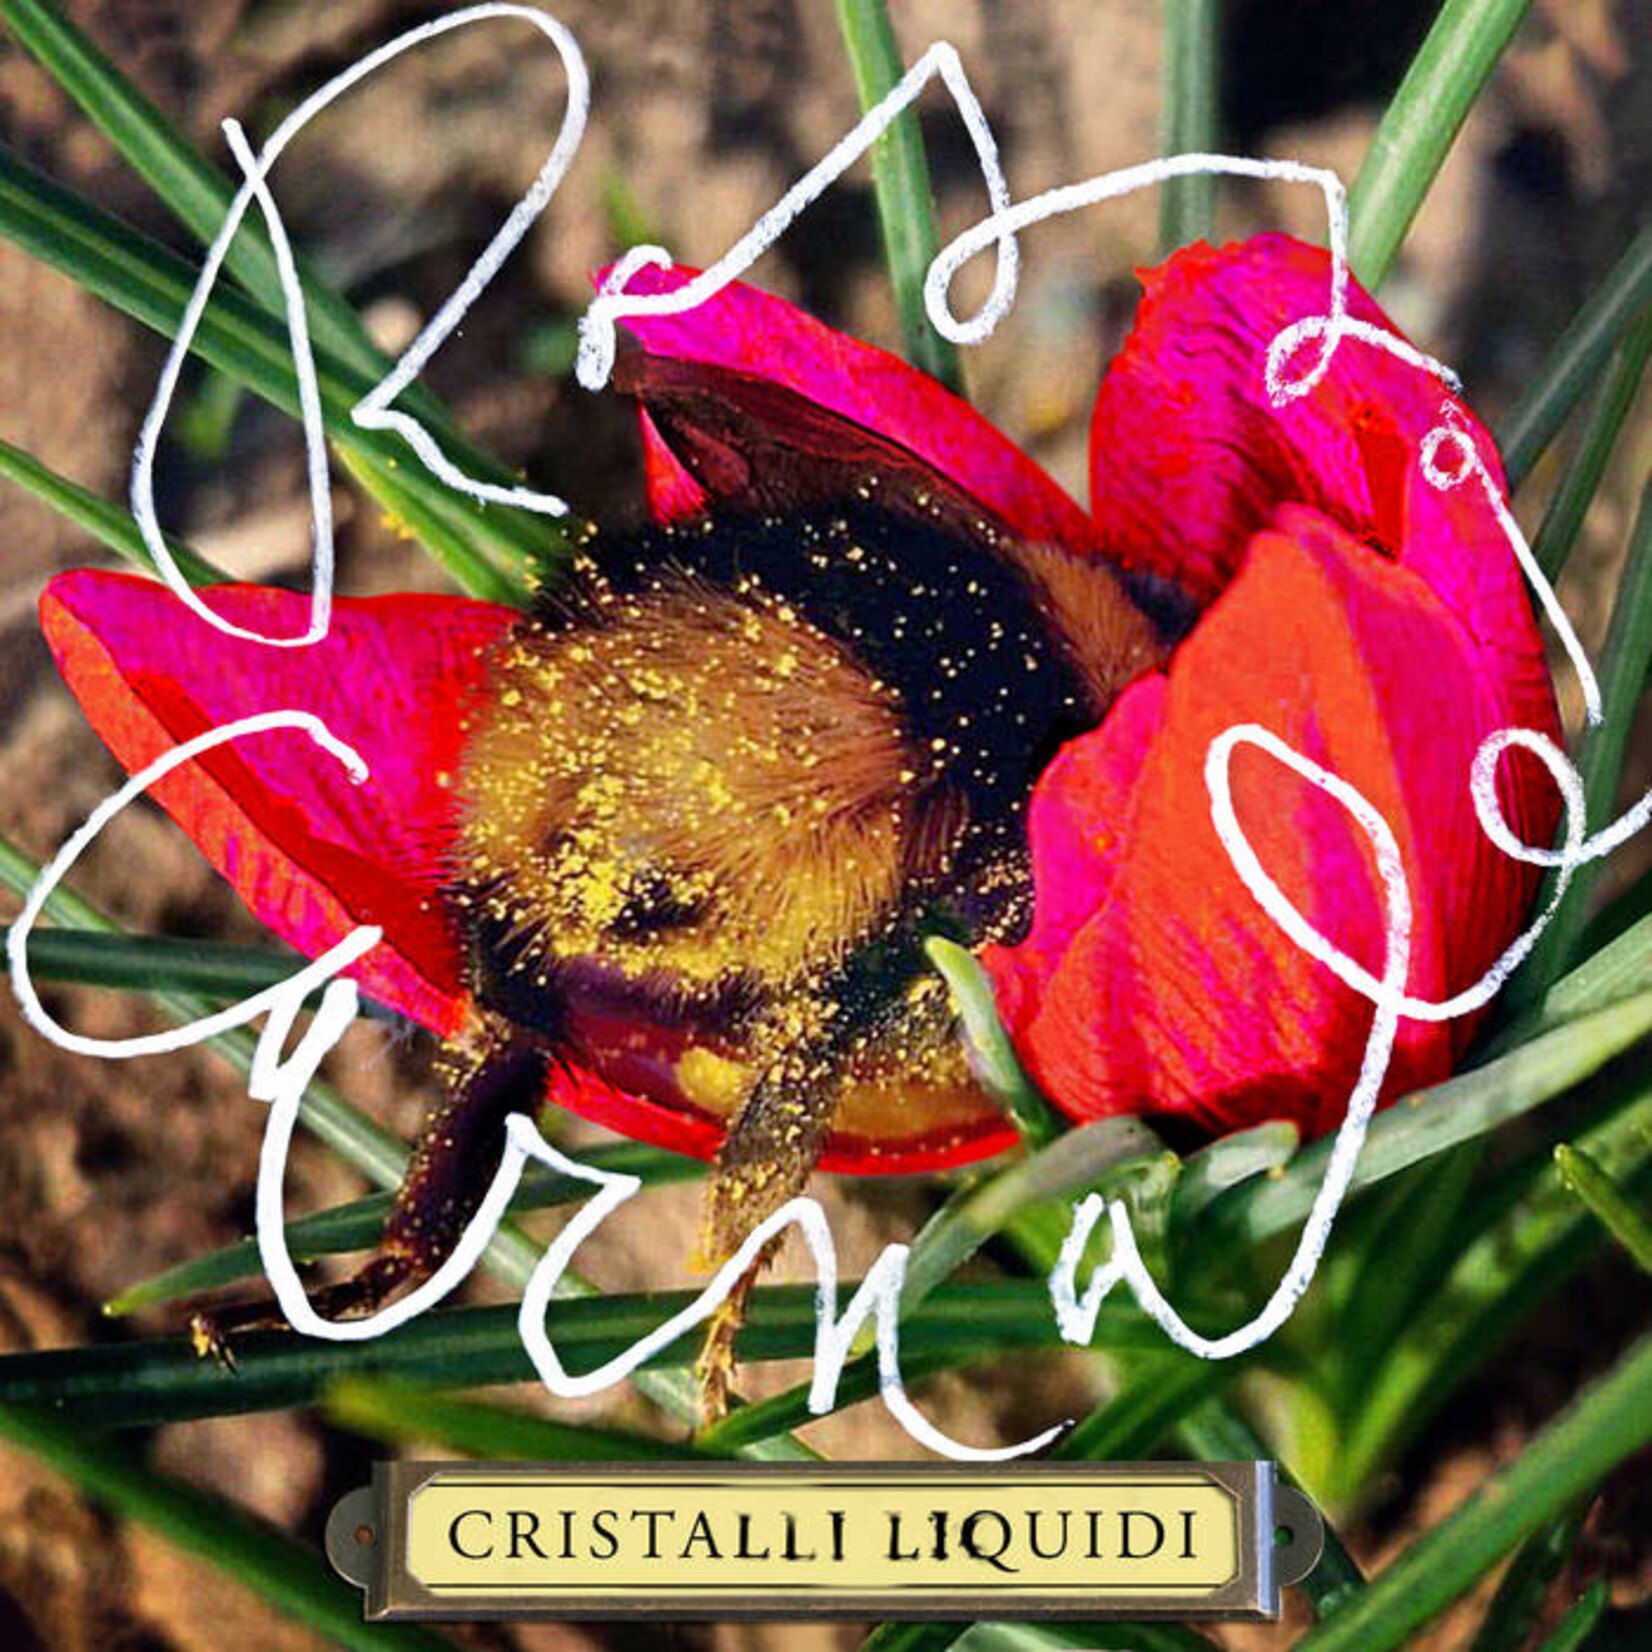 Cristalli Liquidi with Deux Control - Rosso Carnale